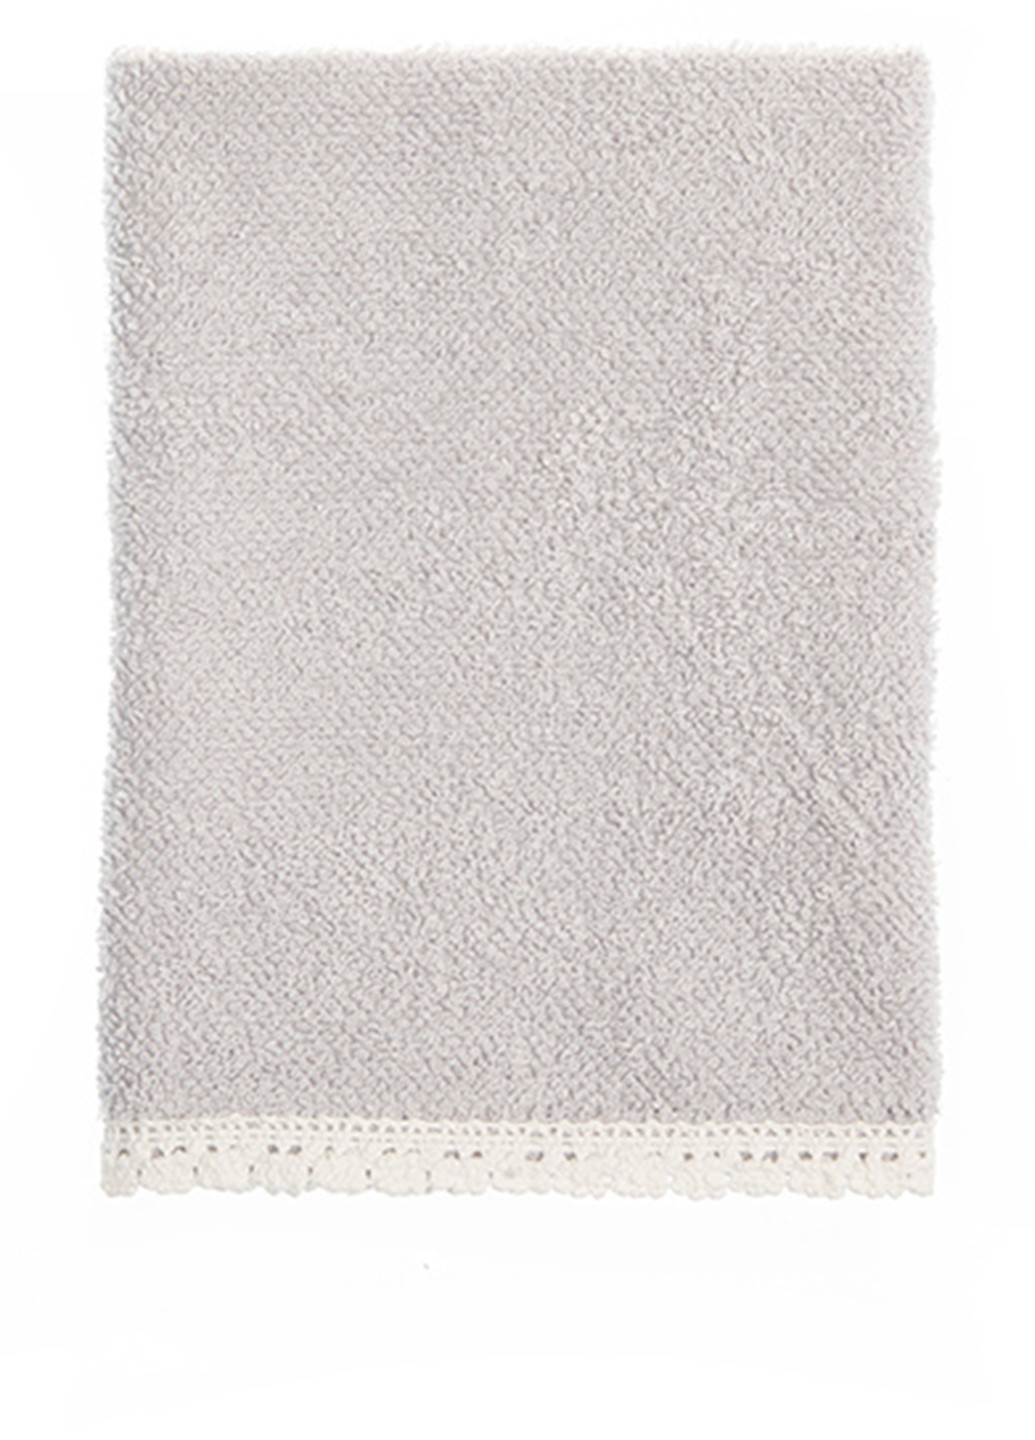 English Home полотенце, 30х40 см однотонный серый производство - Турция